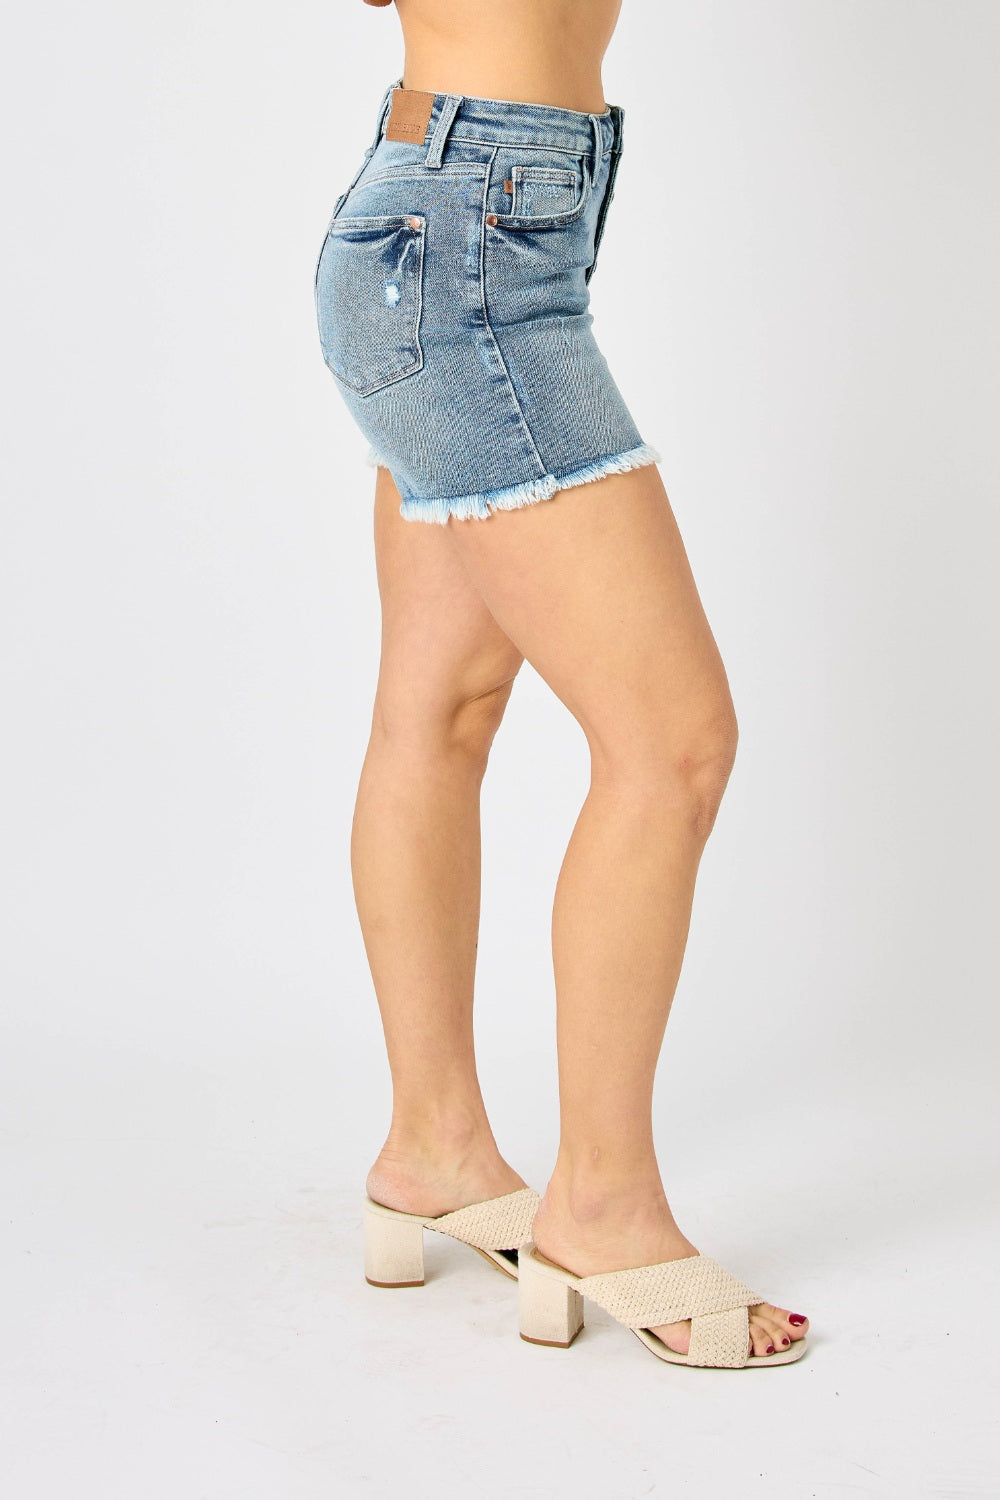 Button Fly Raw Hem Denim Shorts for Women | Shorts | Ro + Ivy